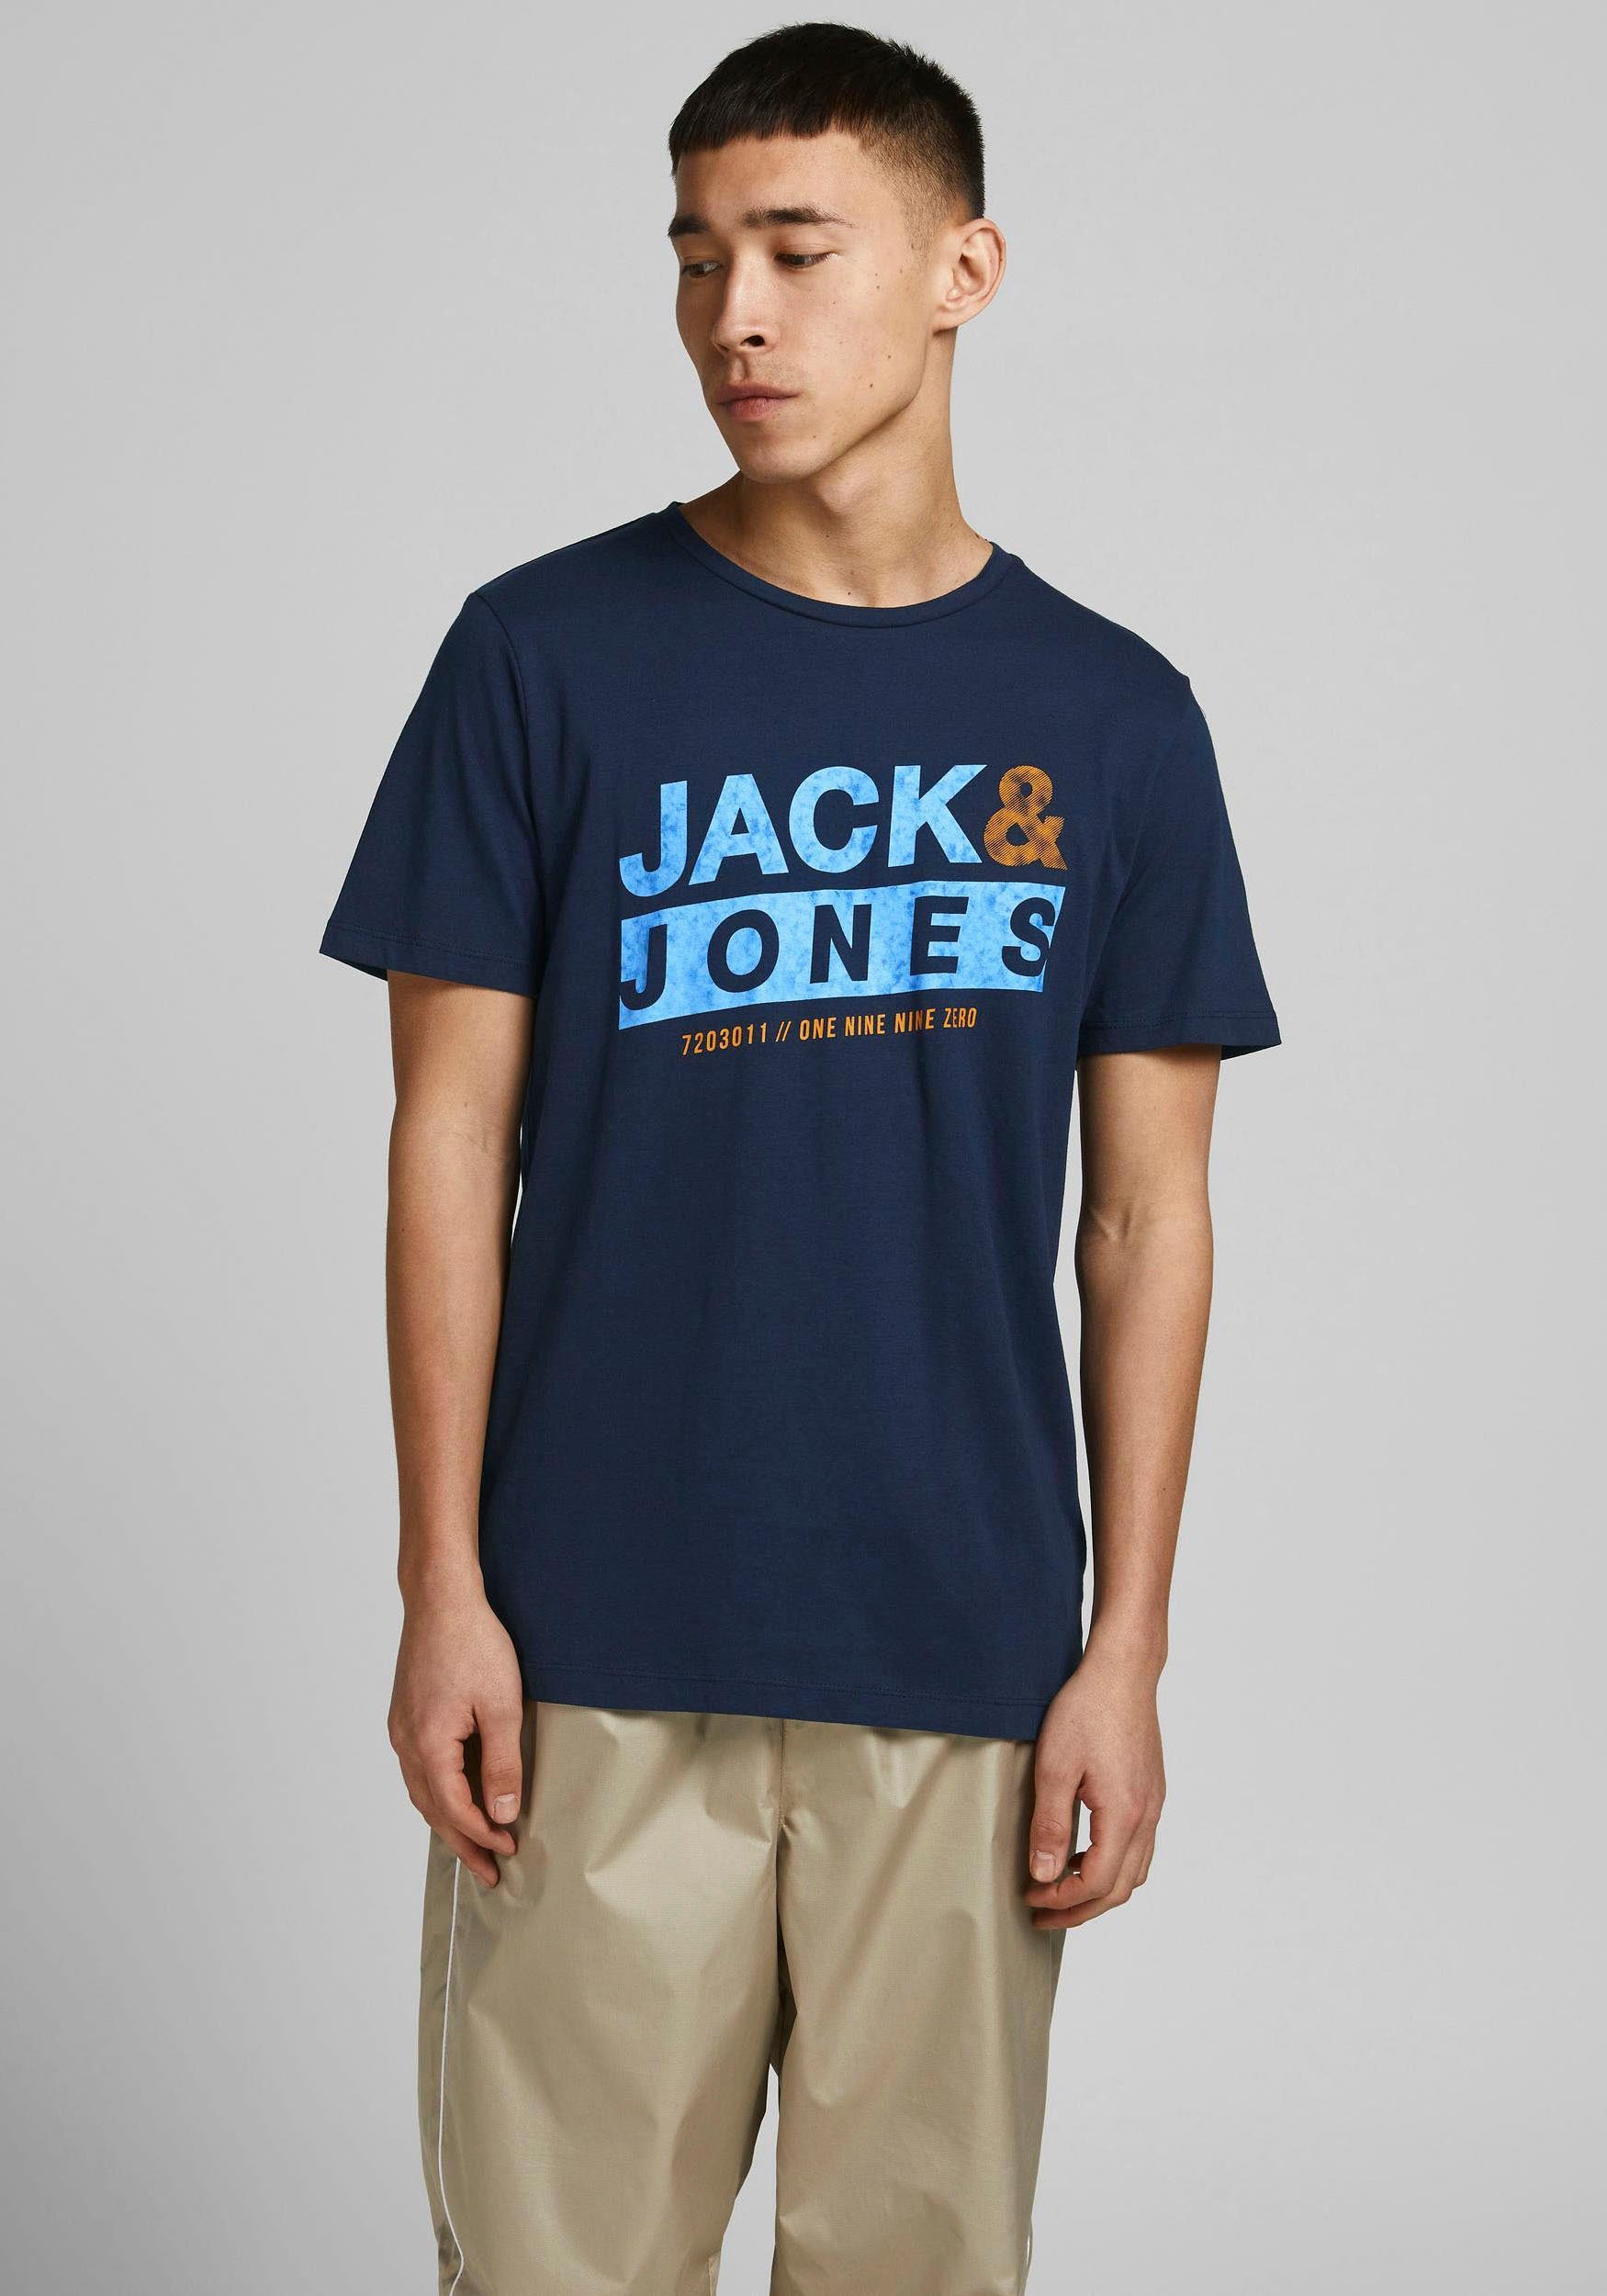 Jack & Jones Herren T-Shirts online kaufen | OTTO